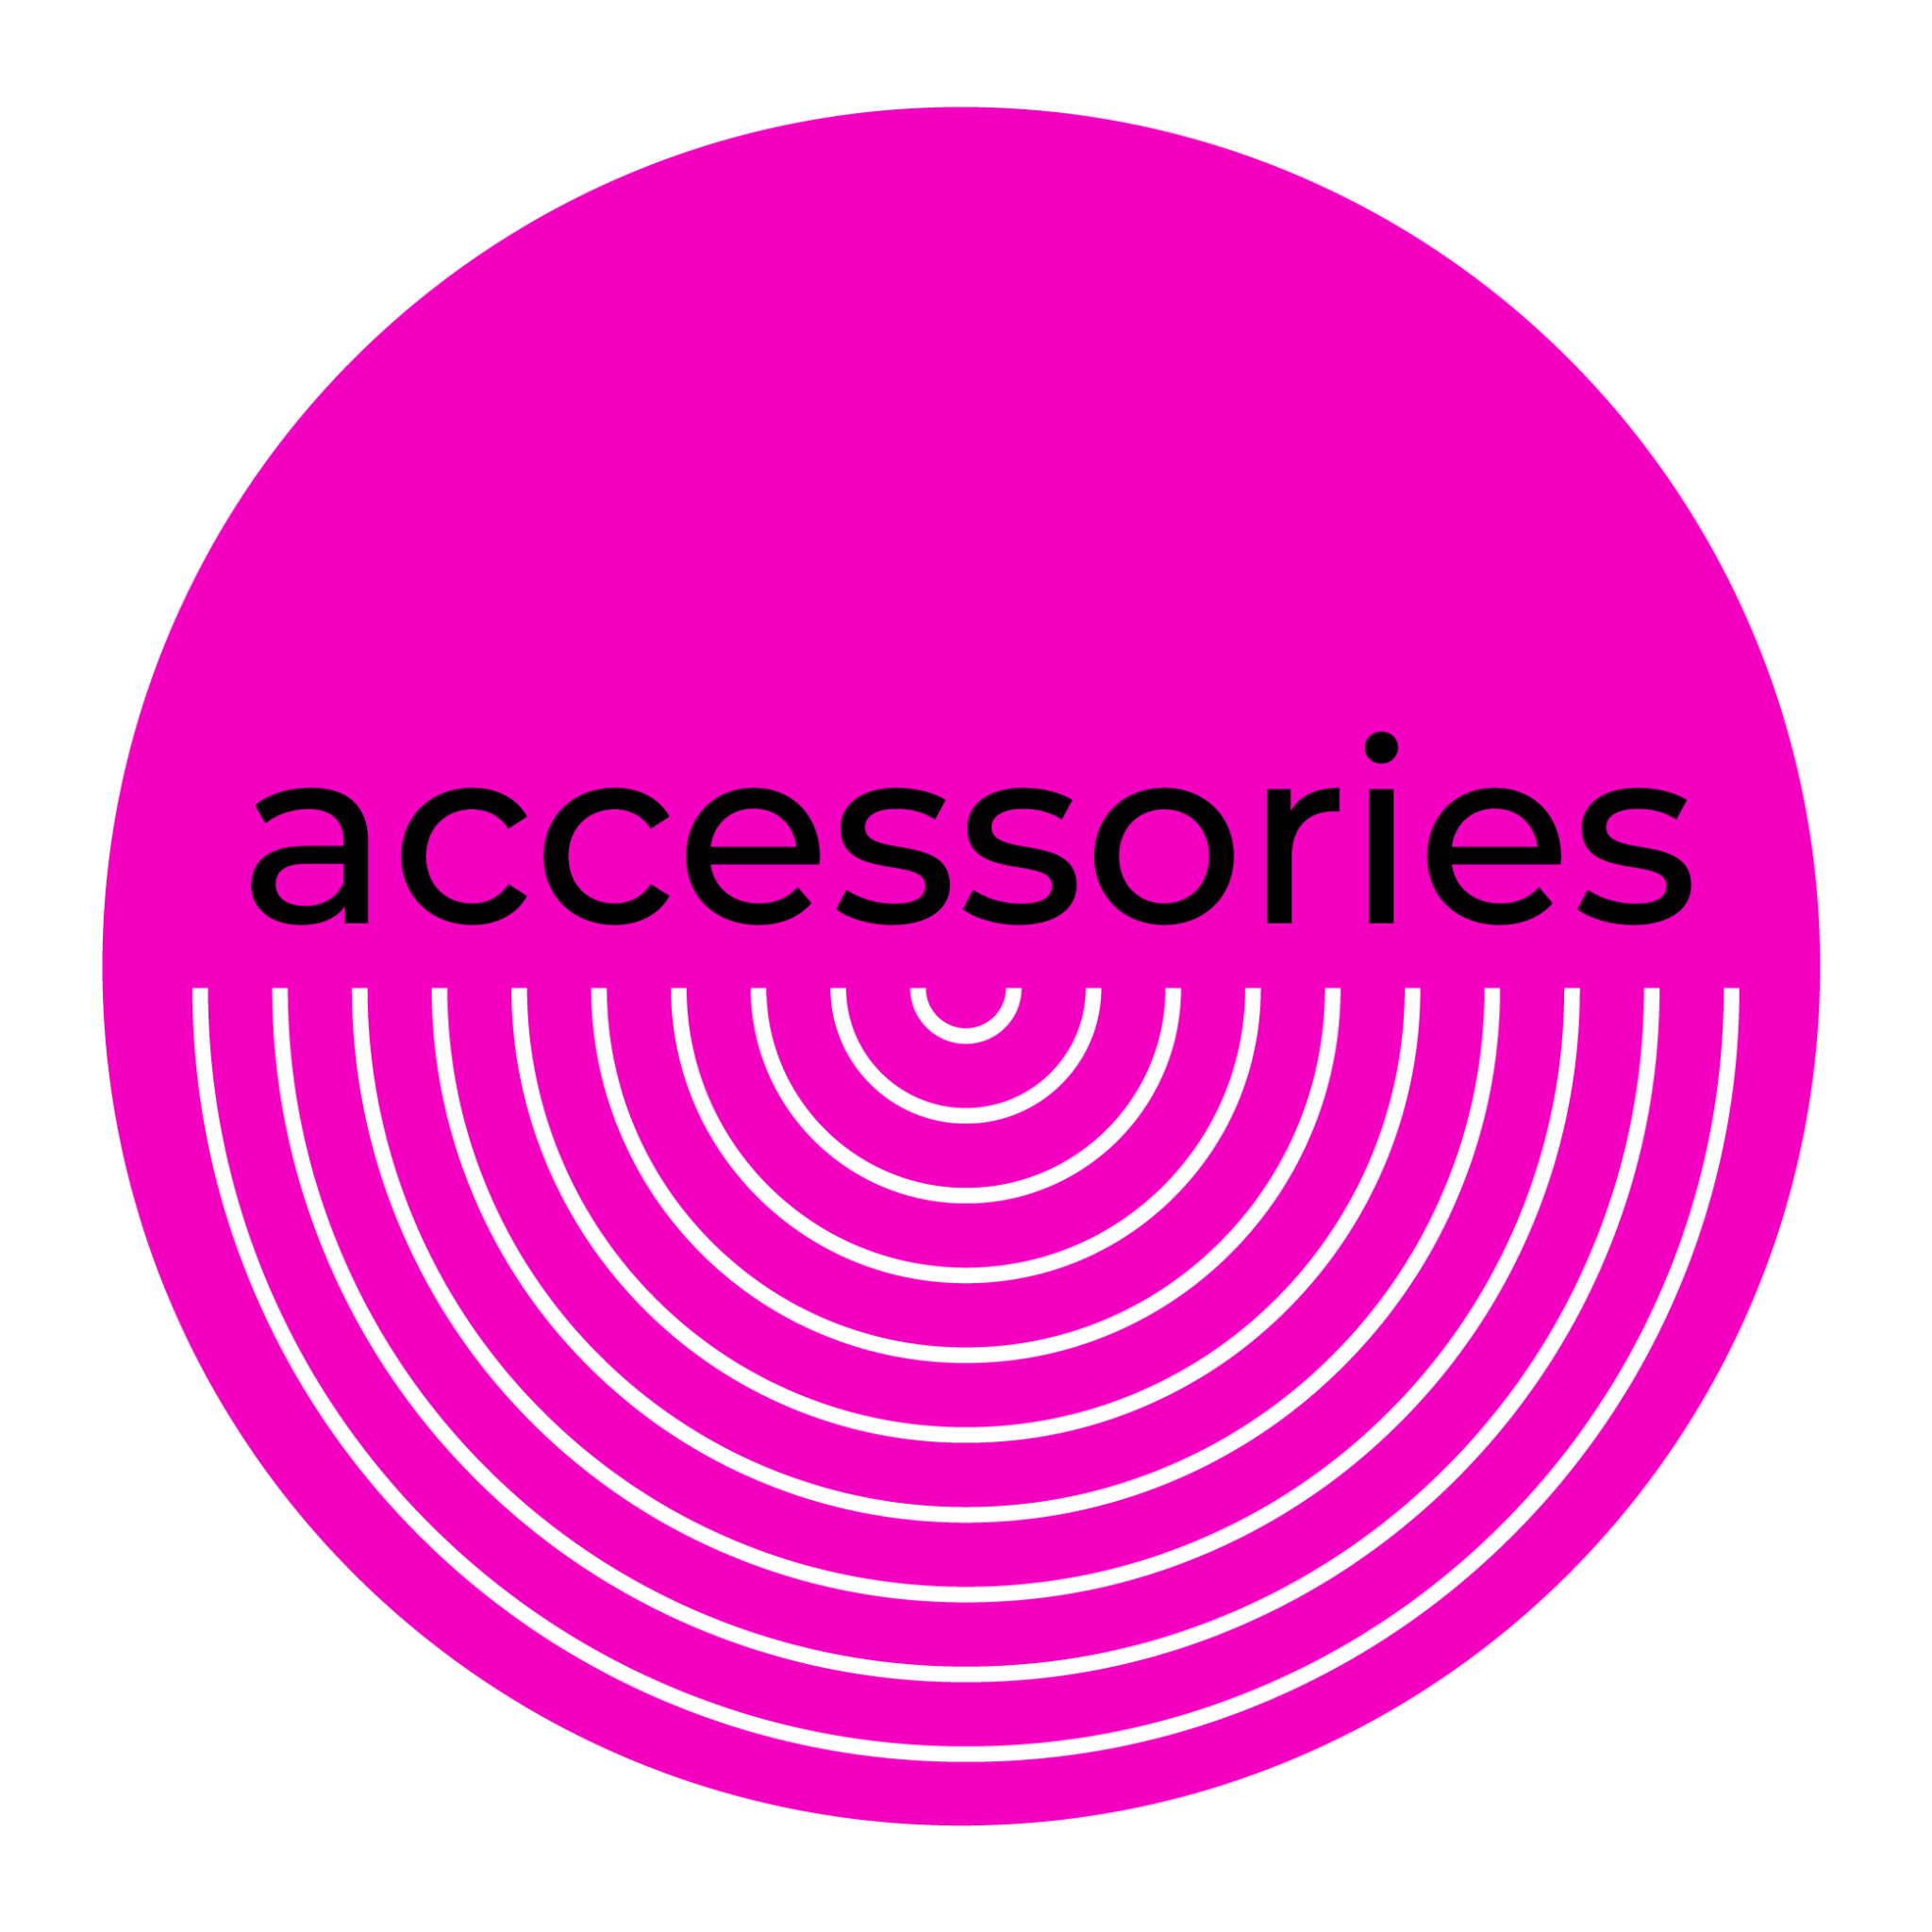 accessories circle